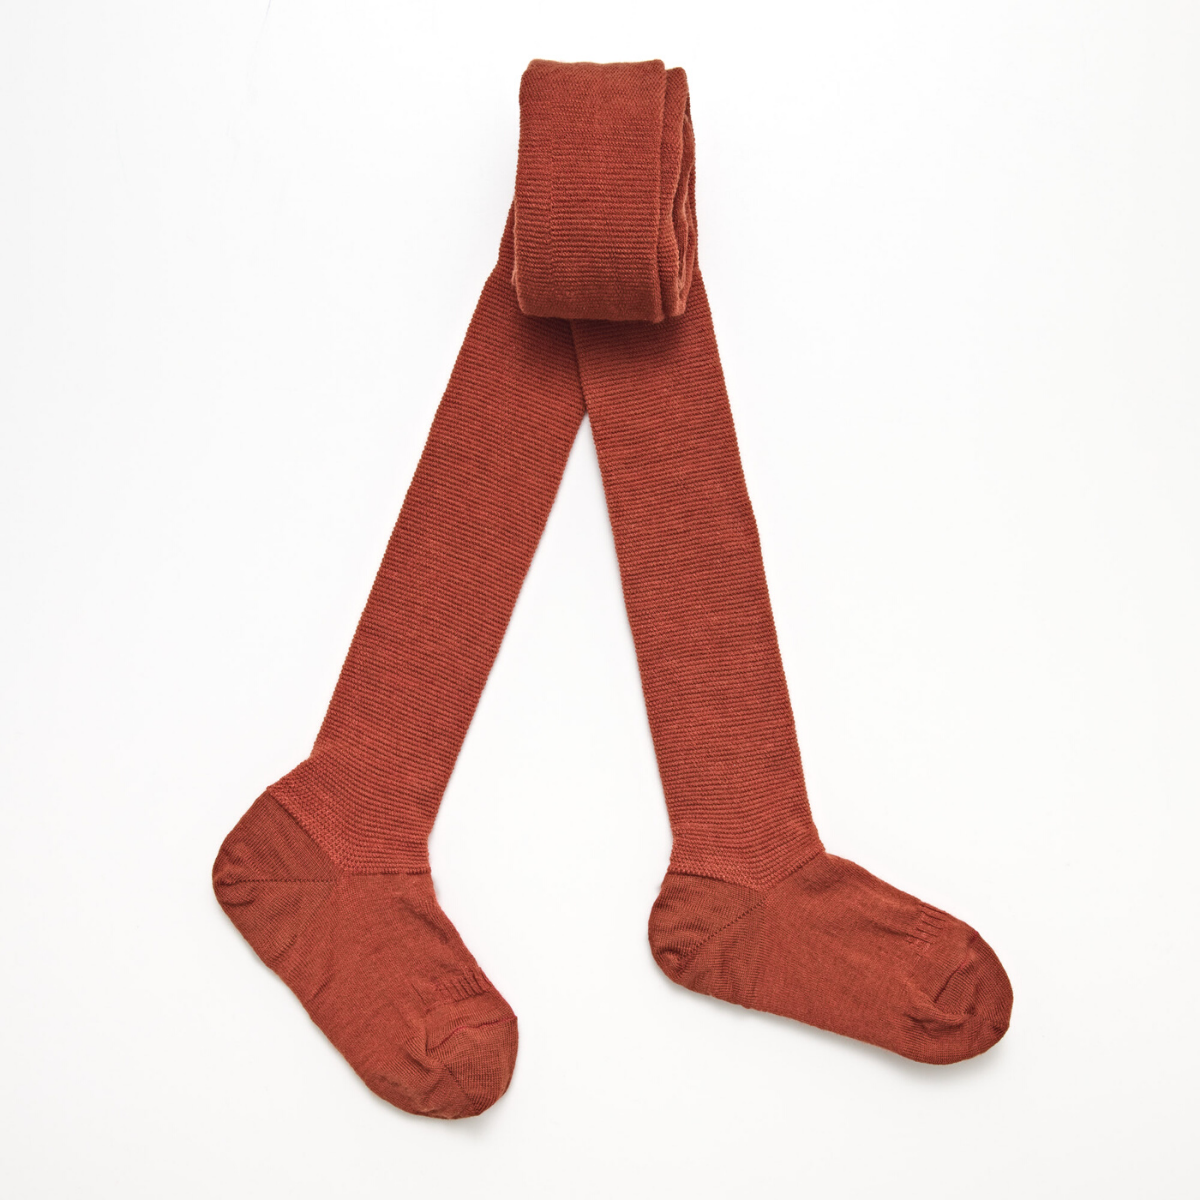 tights_womans_merino_wool_nz_stockings_australia